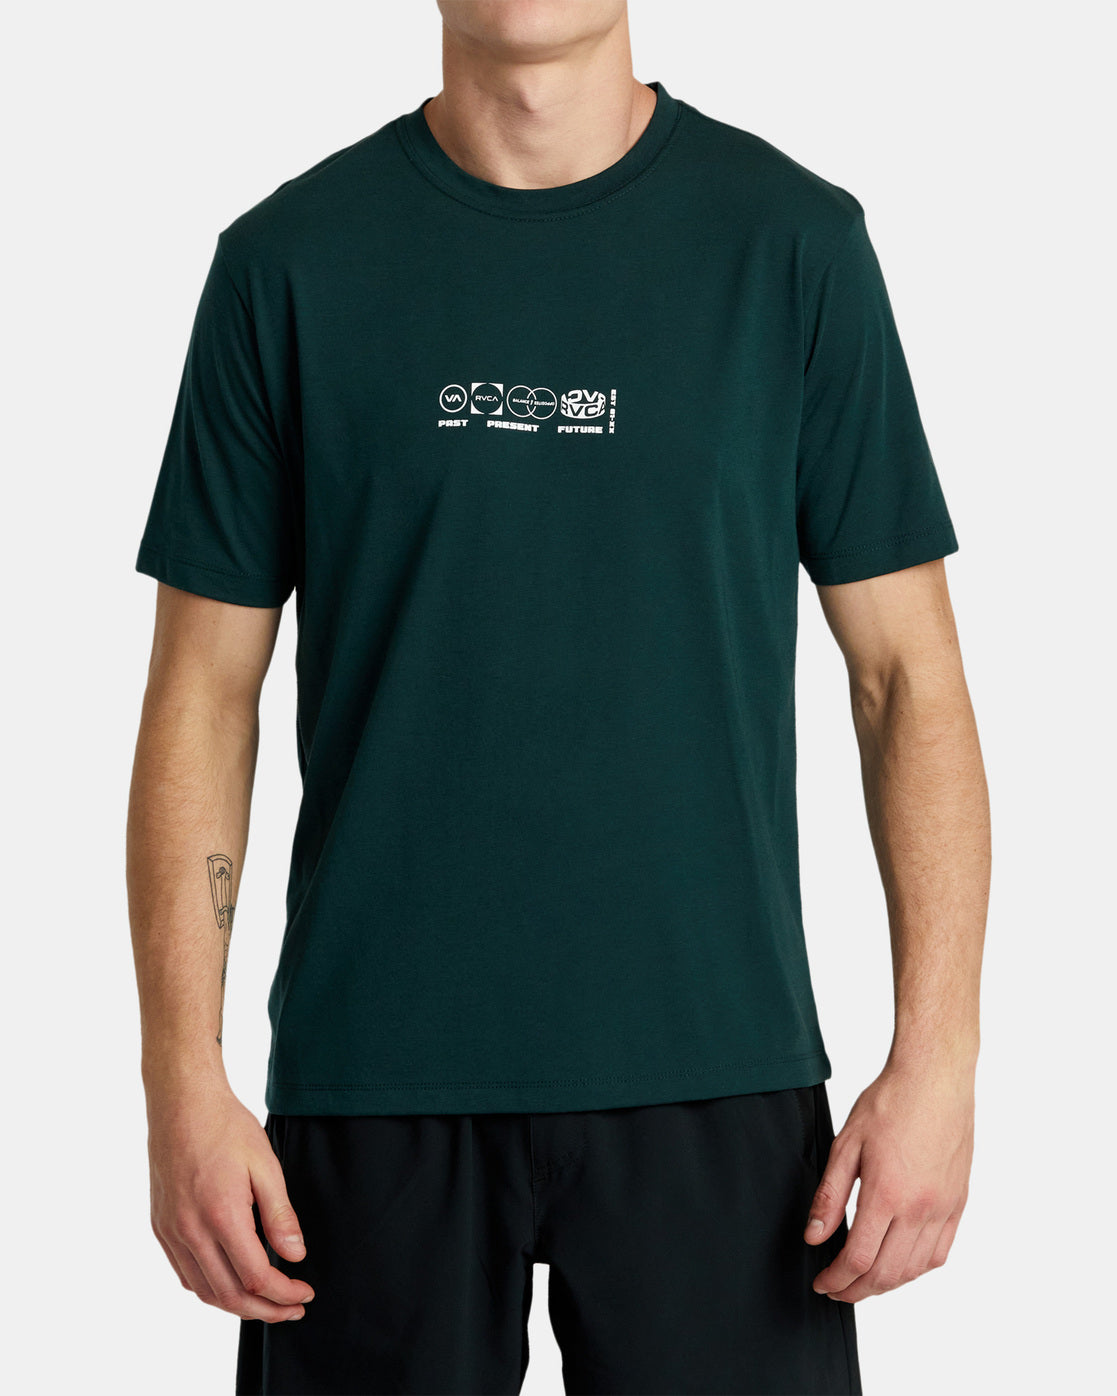 RVCA Pennant Short Sleve T-Shirt - AVYZT00564-DGN